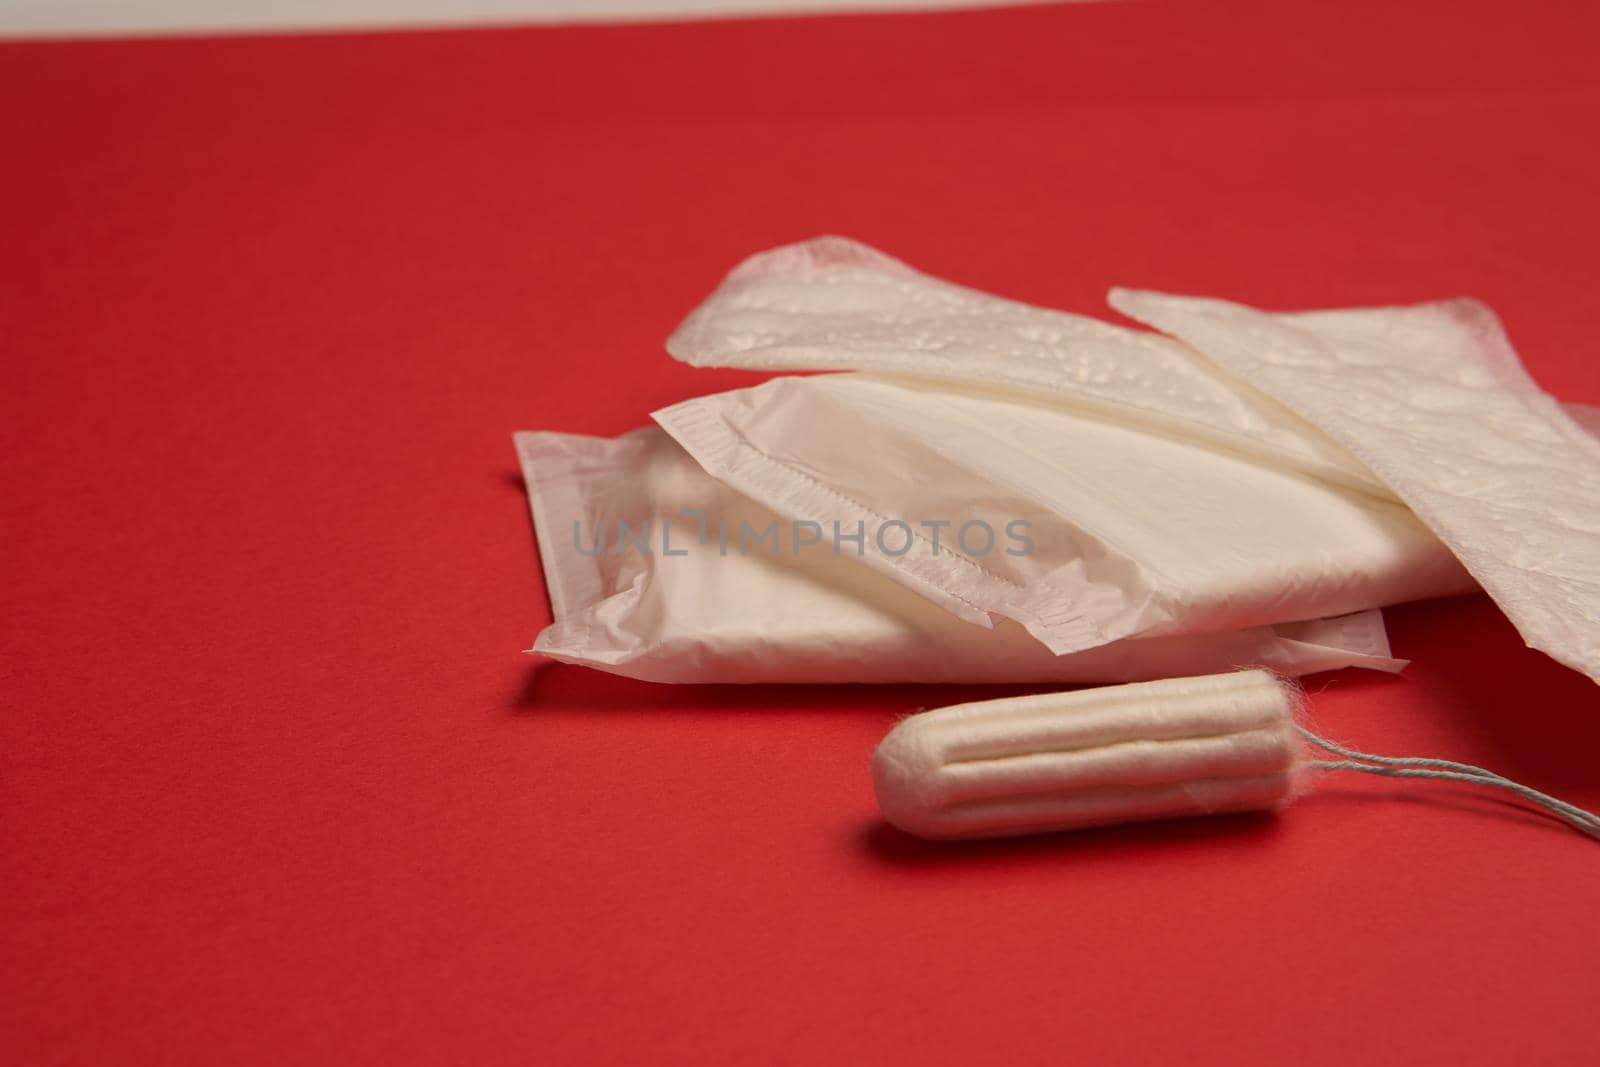 pads tampons underwear feminine hygiene red background by Vichizh